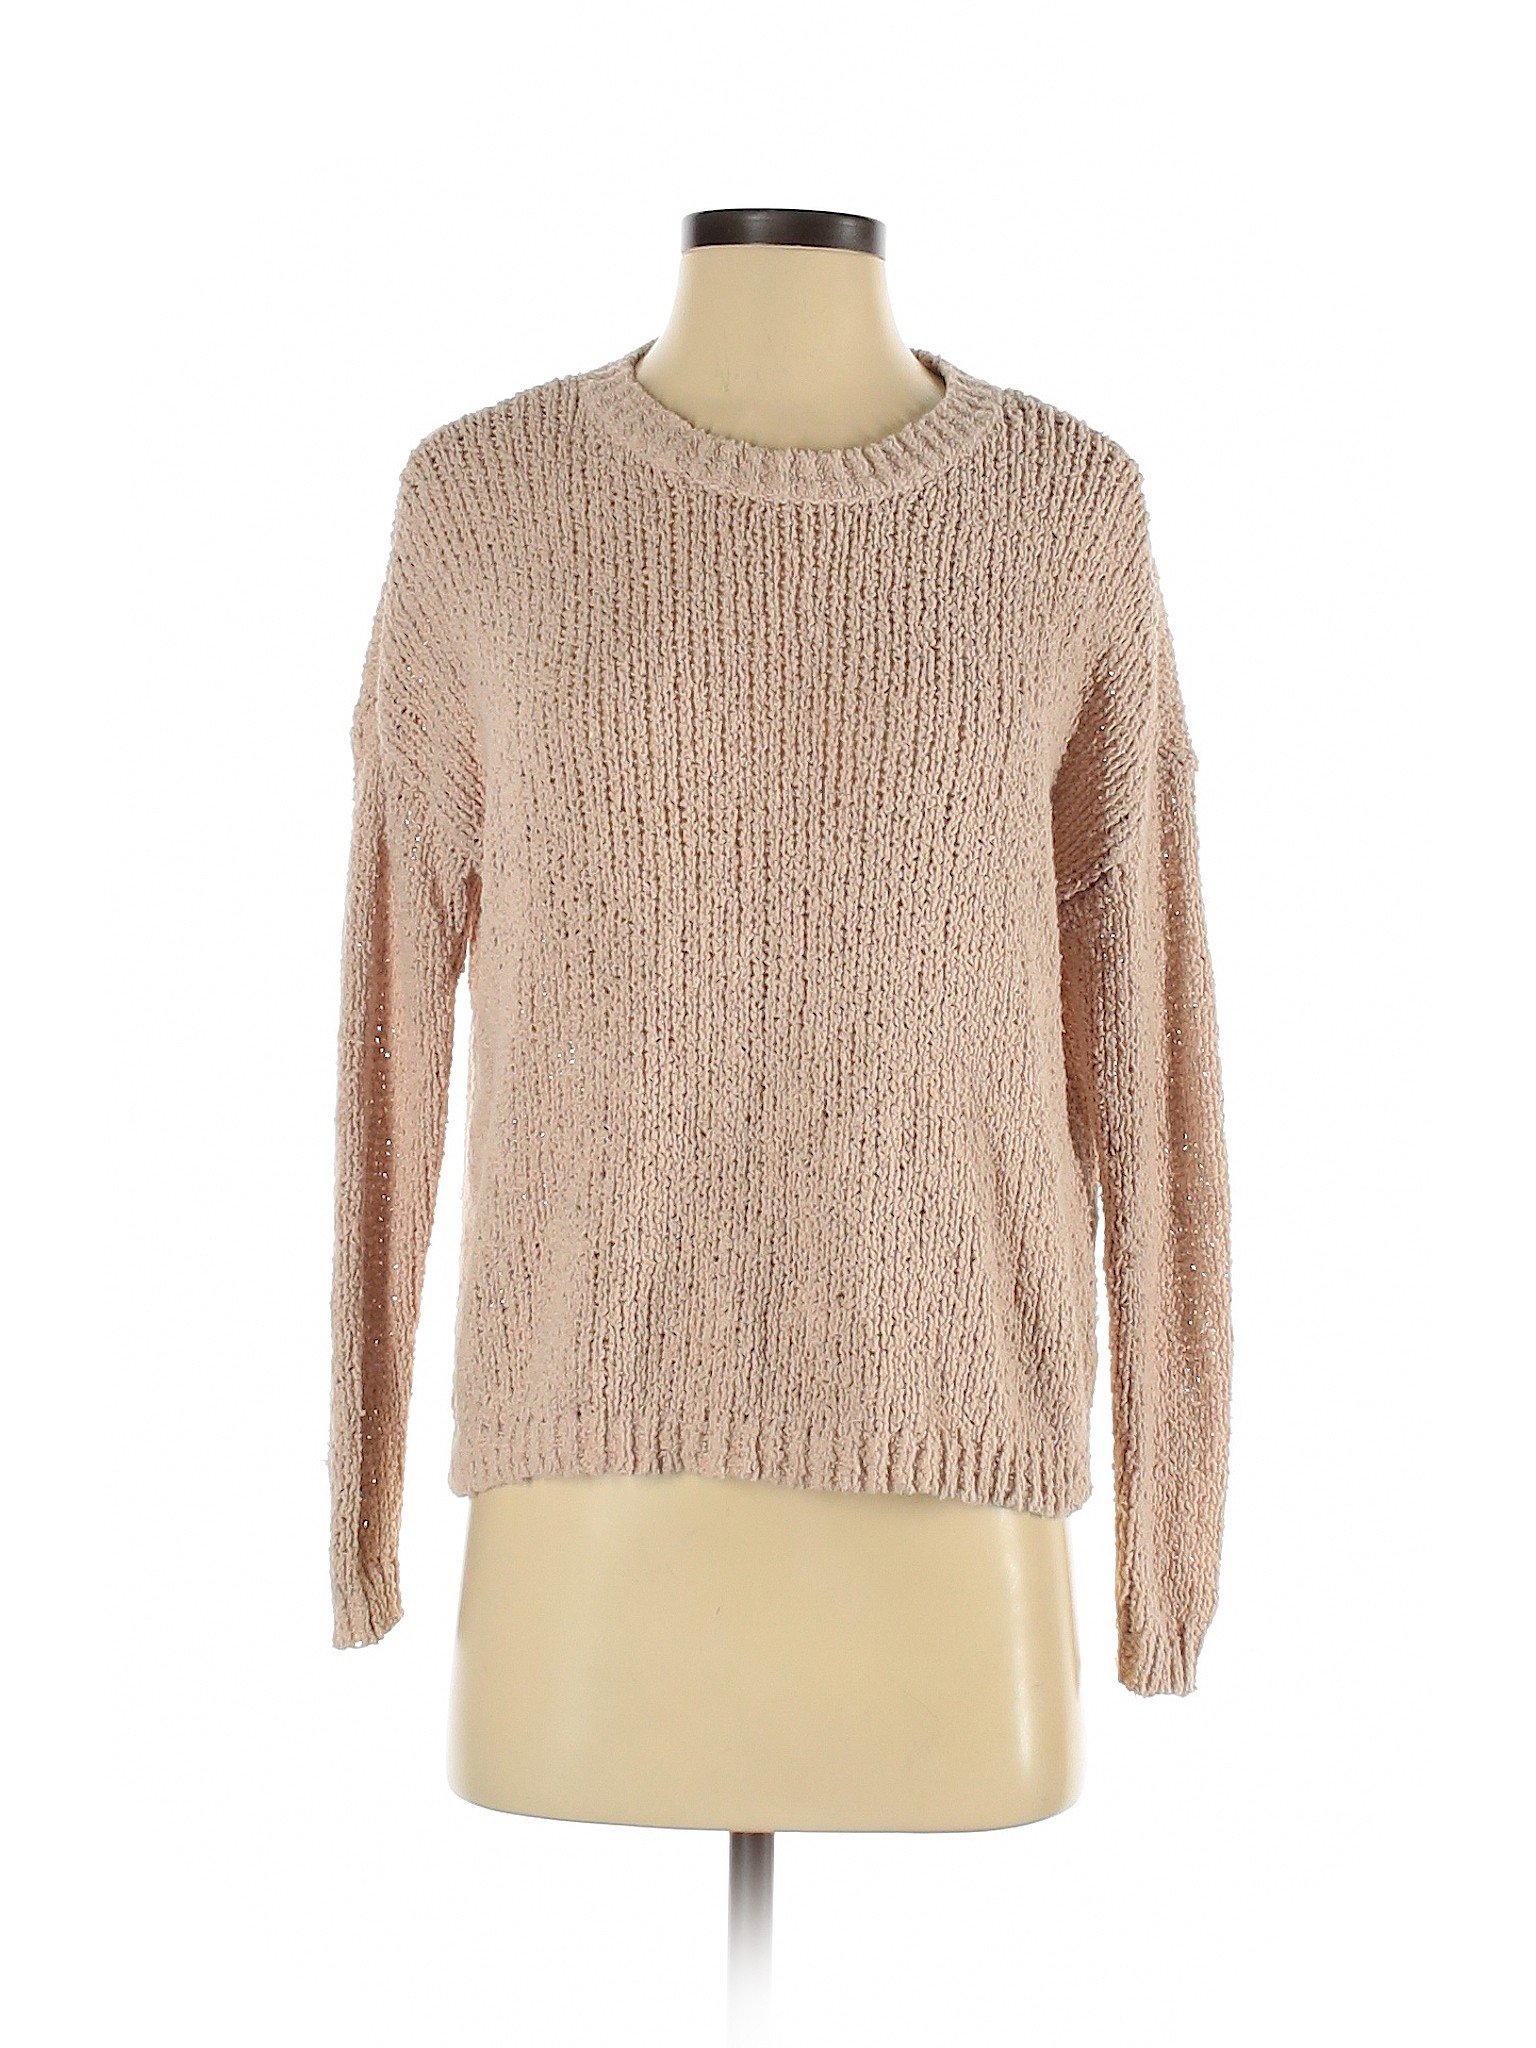 Aerie Women Brown Pullover Sweater XS | eBay